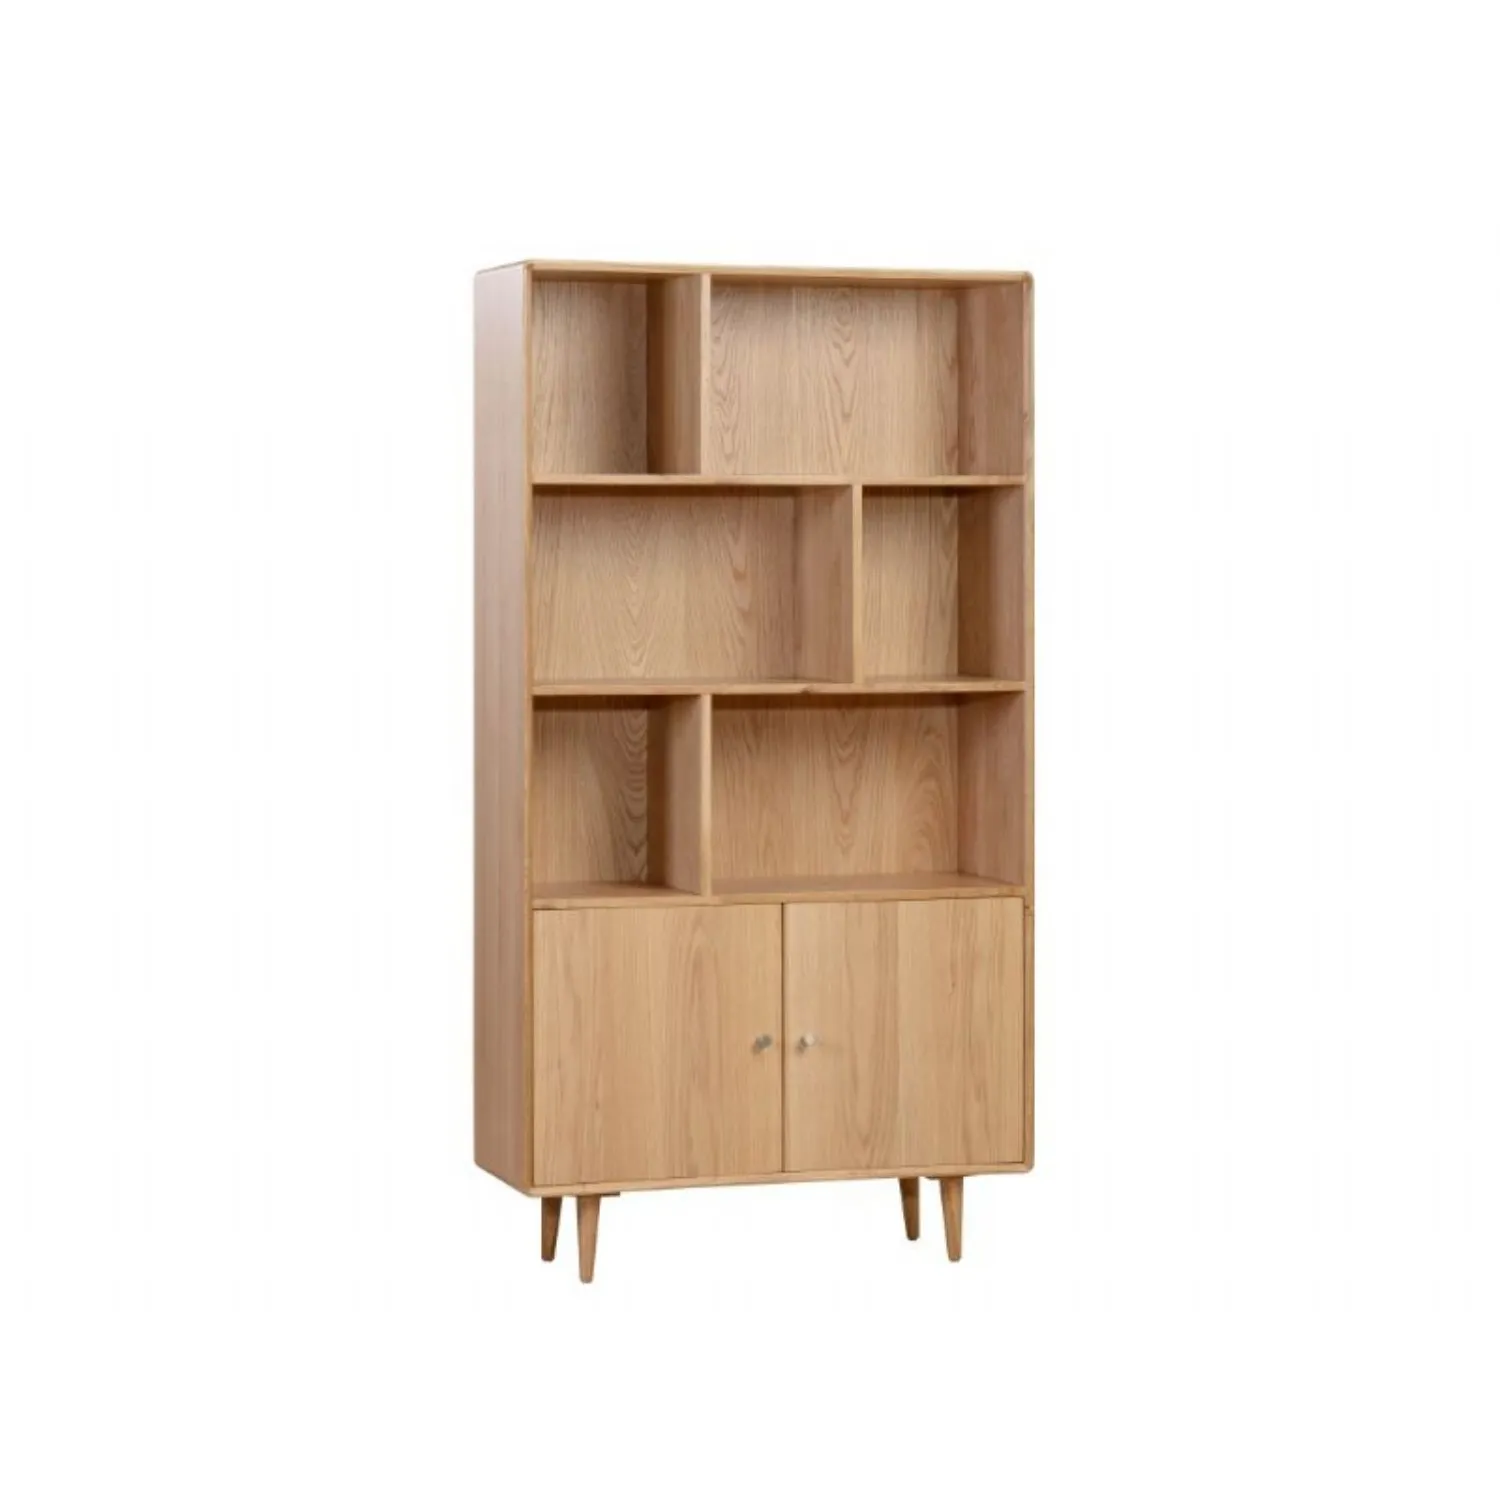 Light Oak Finish Wooden 2 Door Large Bookcase 6 Shelves